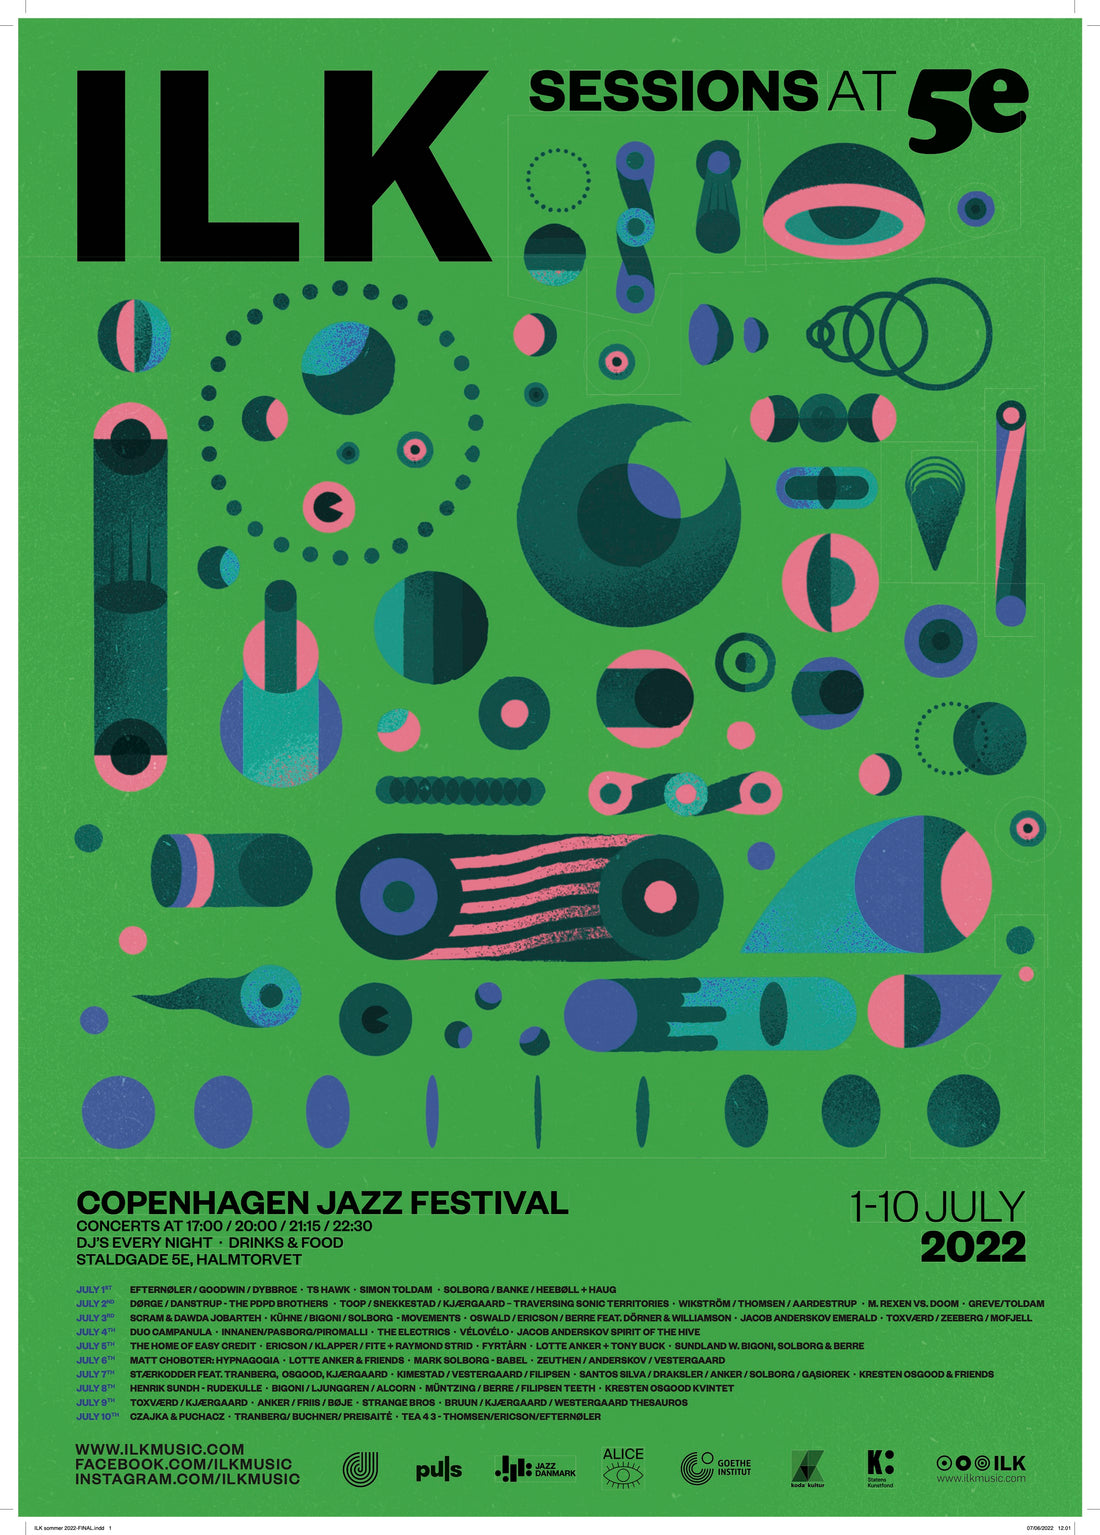 ILK Sessions at Copenhagen Jazz Festival 2022